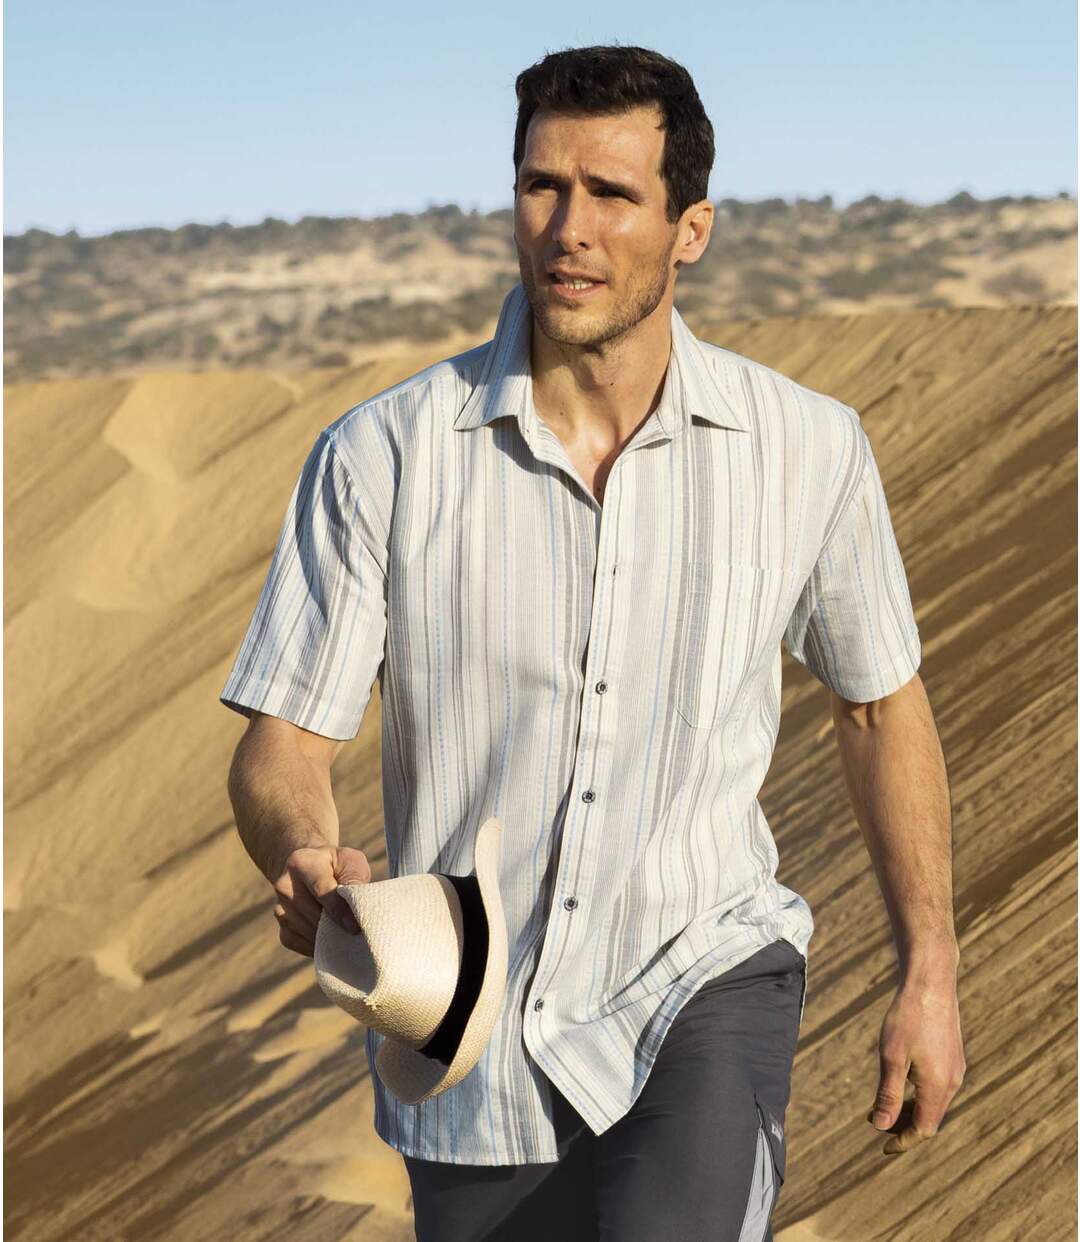 Kurzärmeliges Hemd aus Baumwolle Atlas For Men